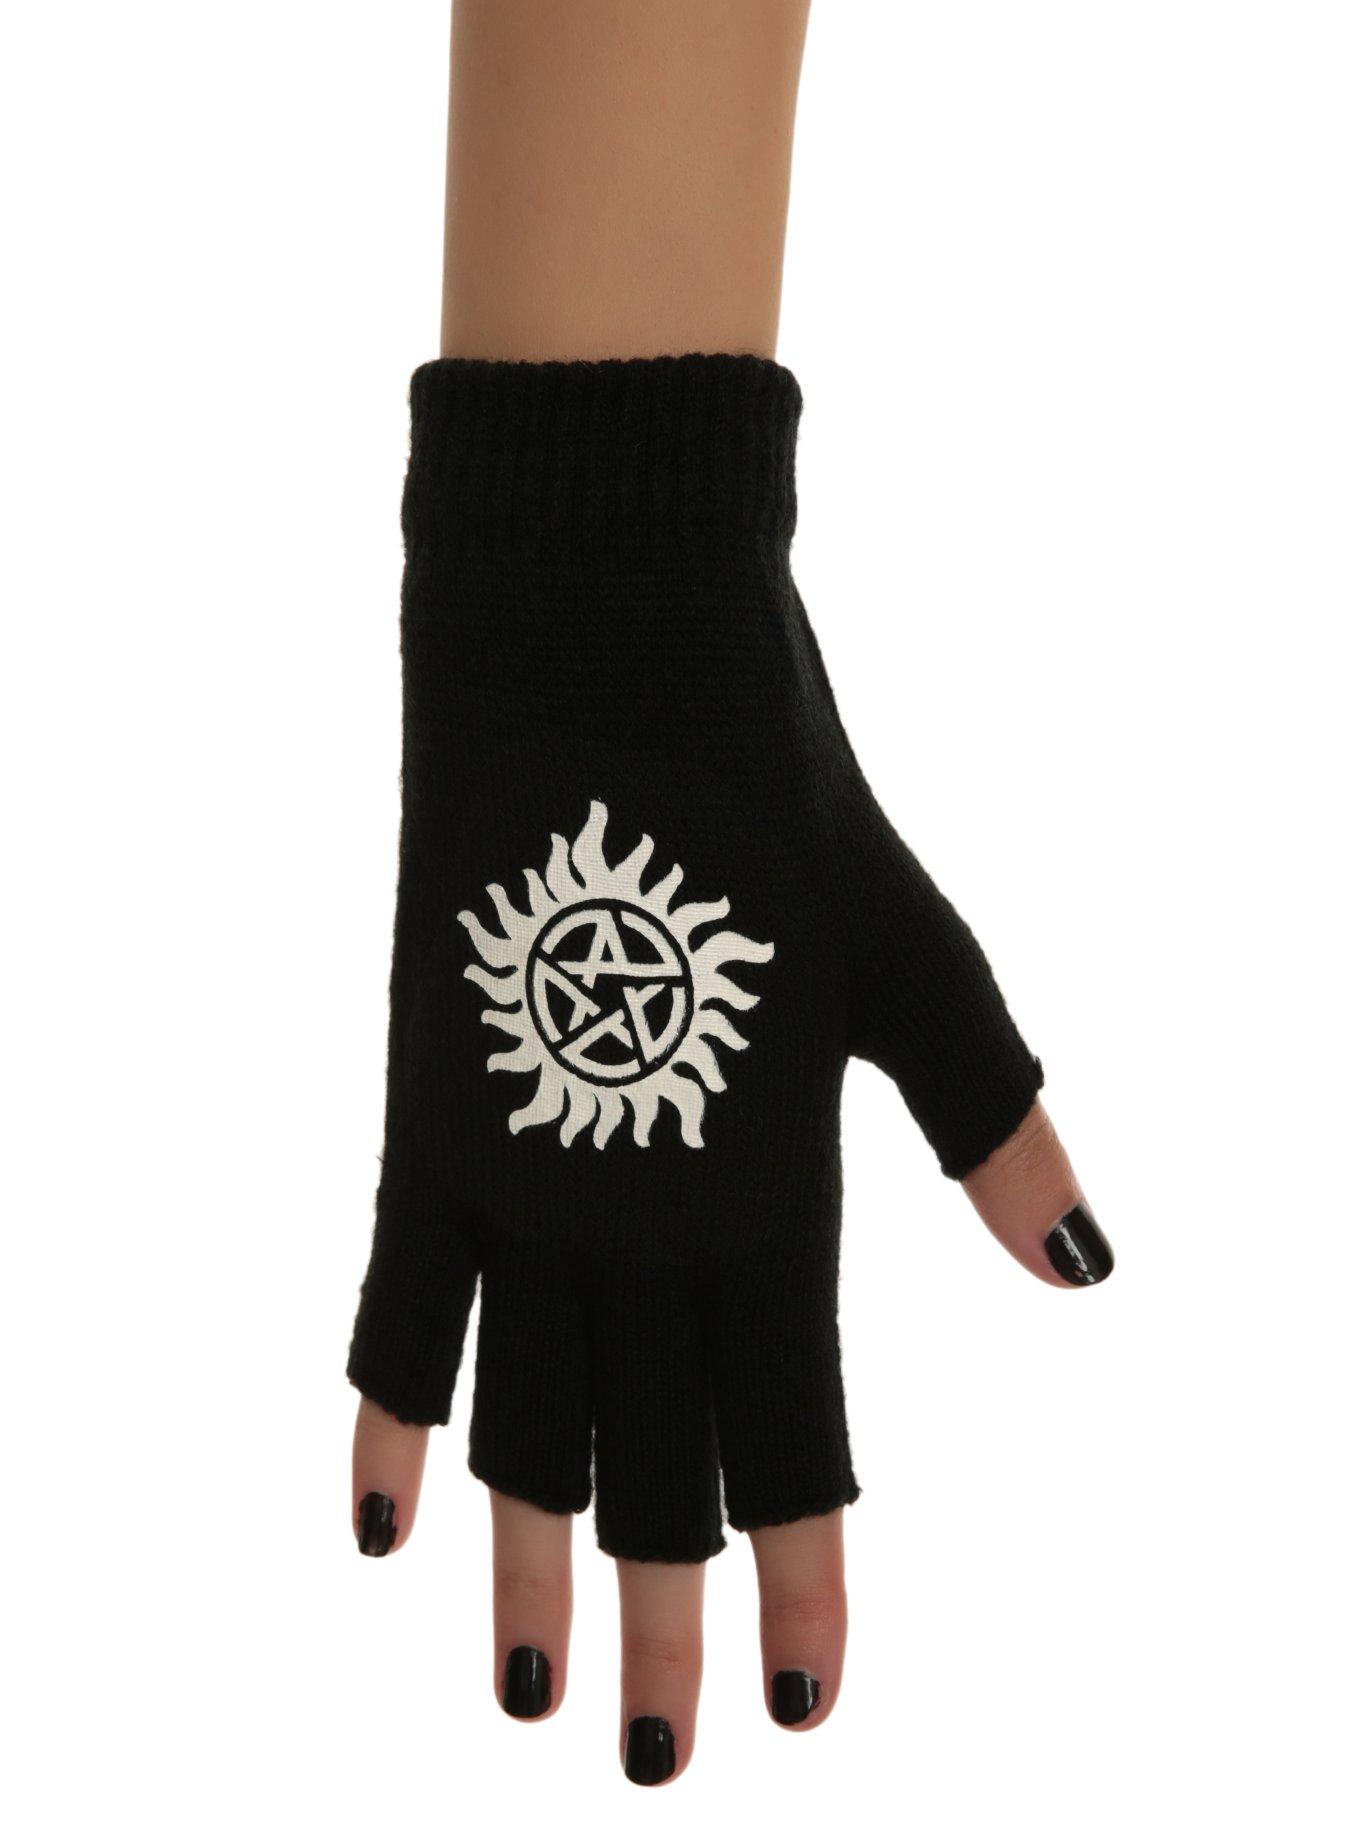 Supernatural Anti-Possession Symbol Fingerless Gloves, , hi-res